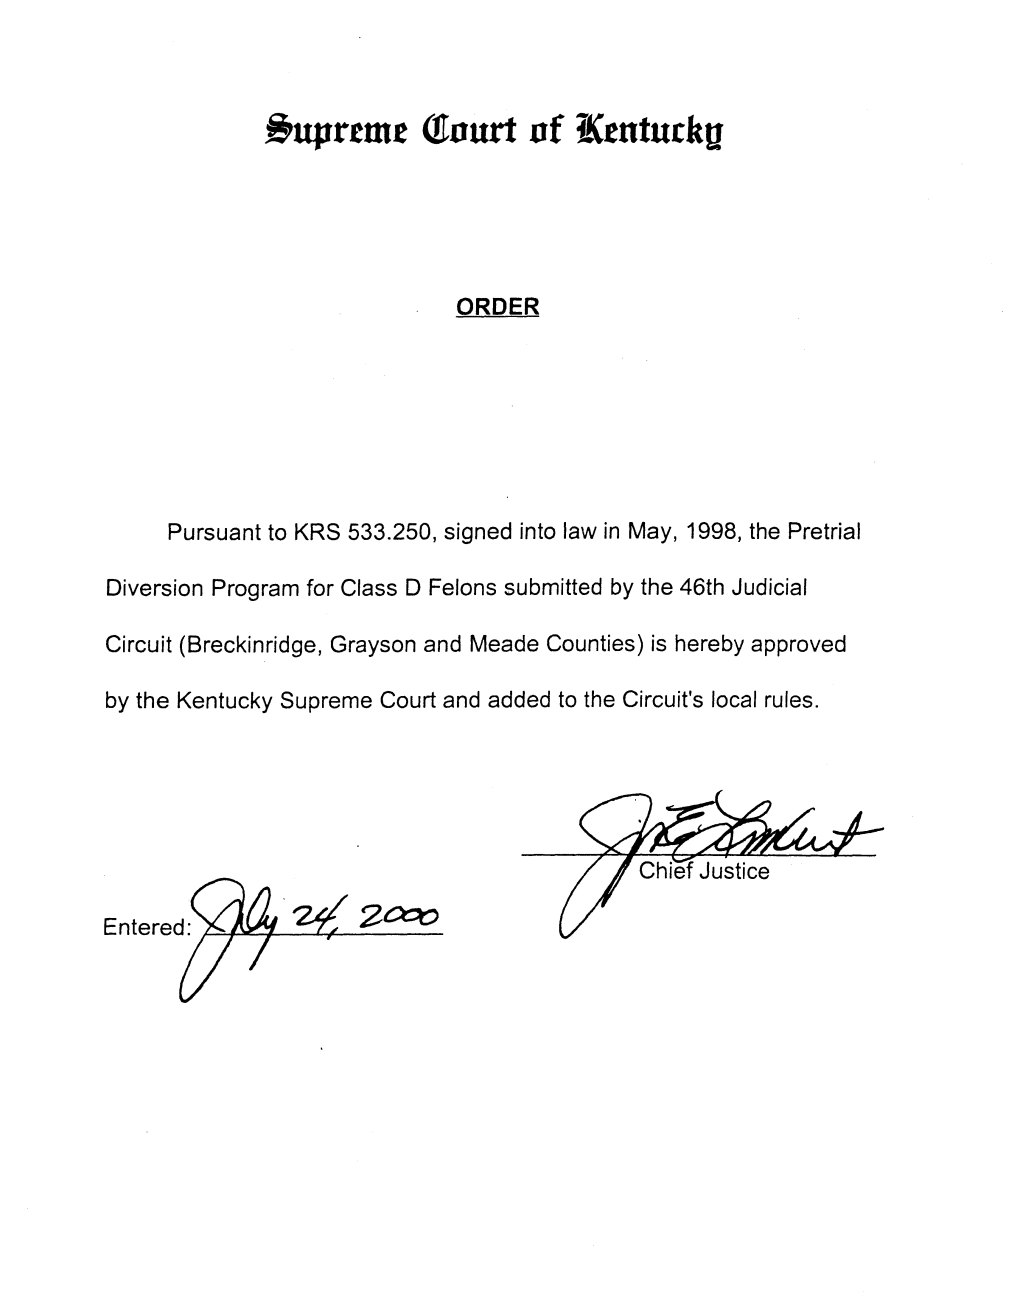 Pretrial Diversion Protocol for the 46Th Judicial Circuit Consisting of Breckinridge, Grayson & Meade Counties